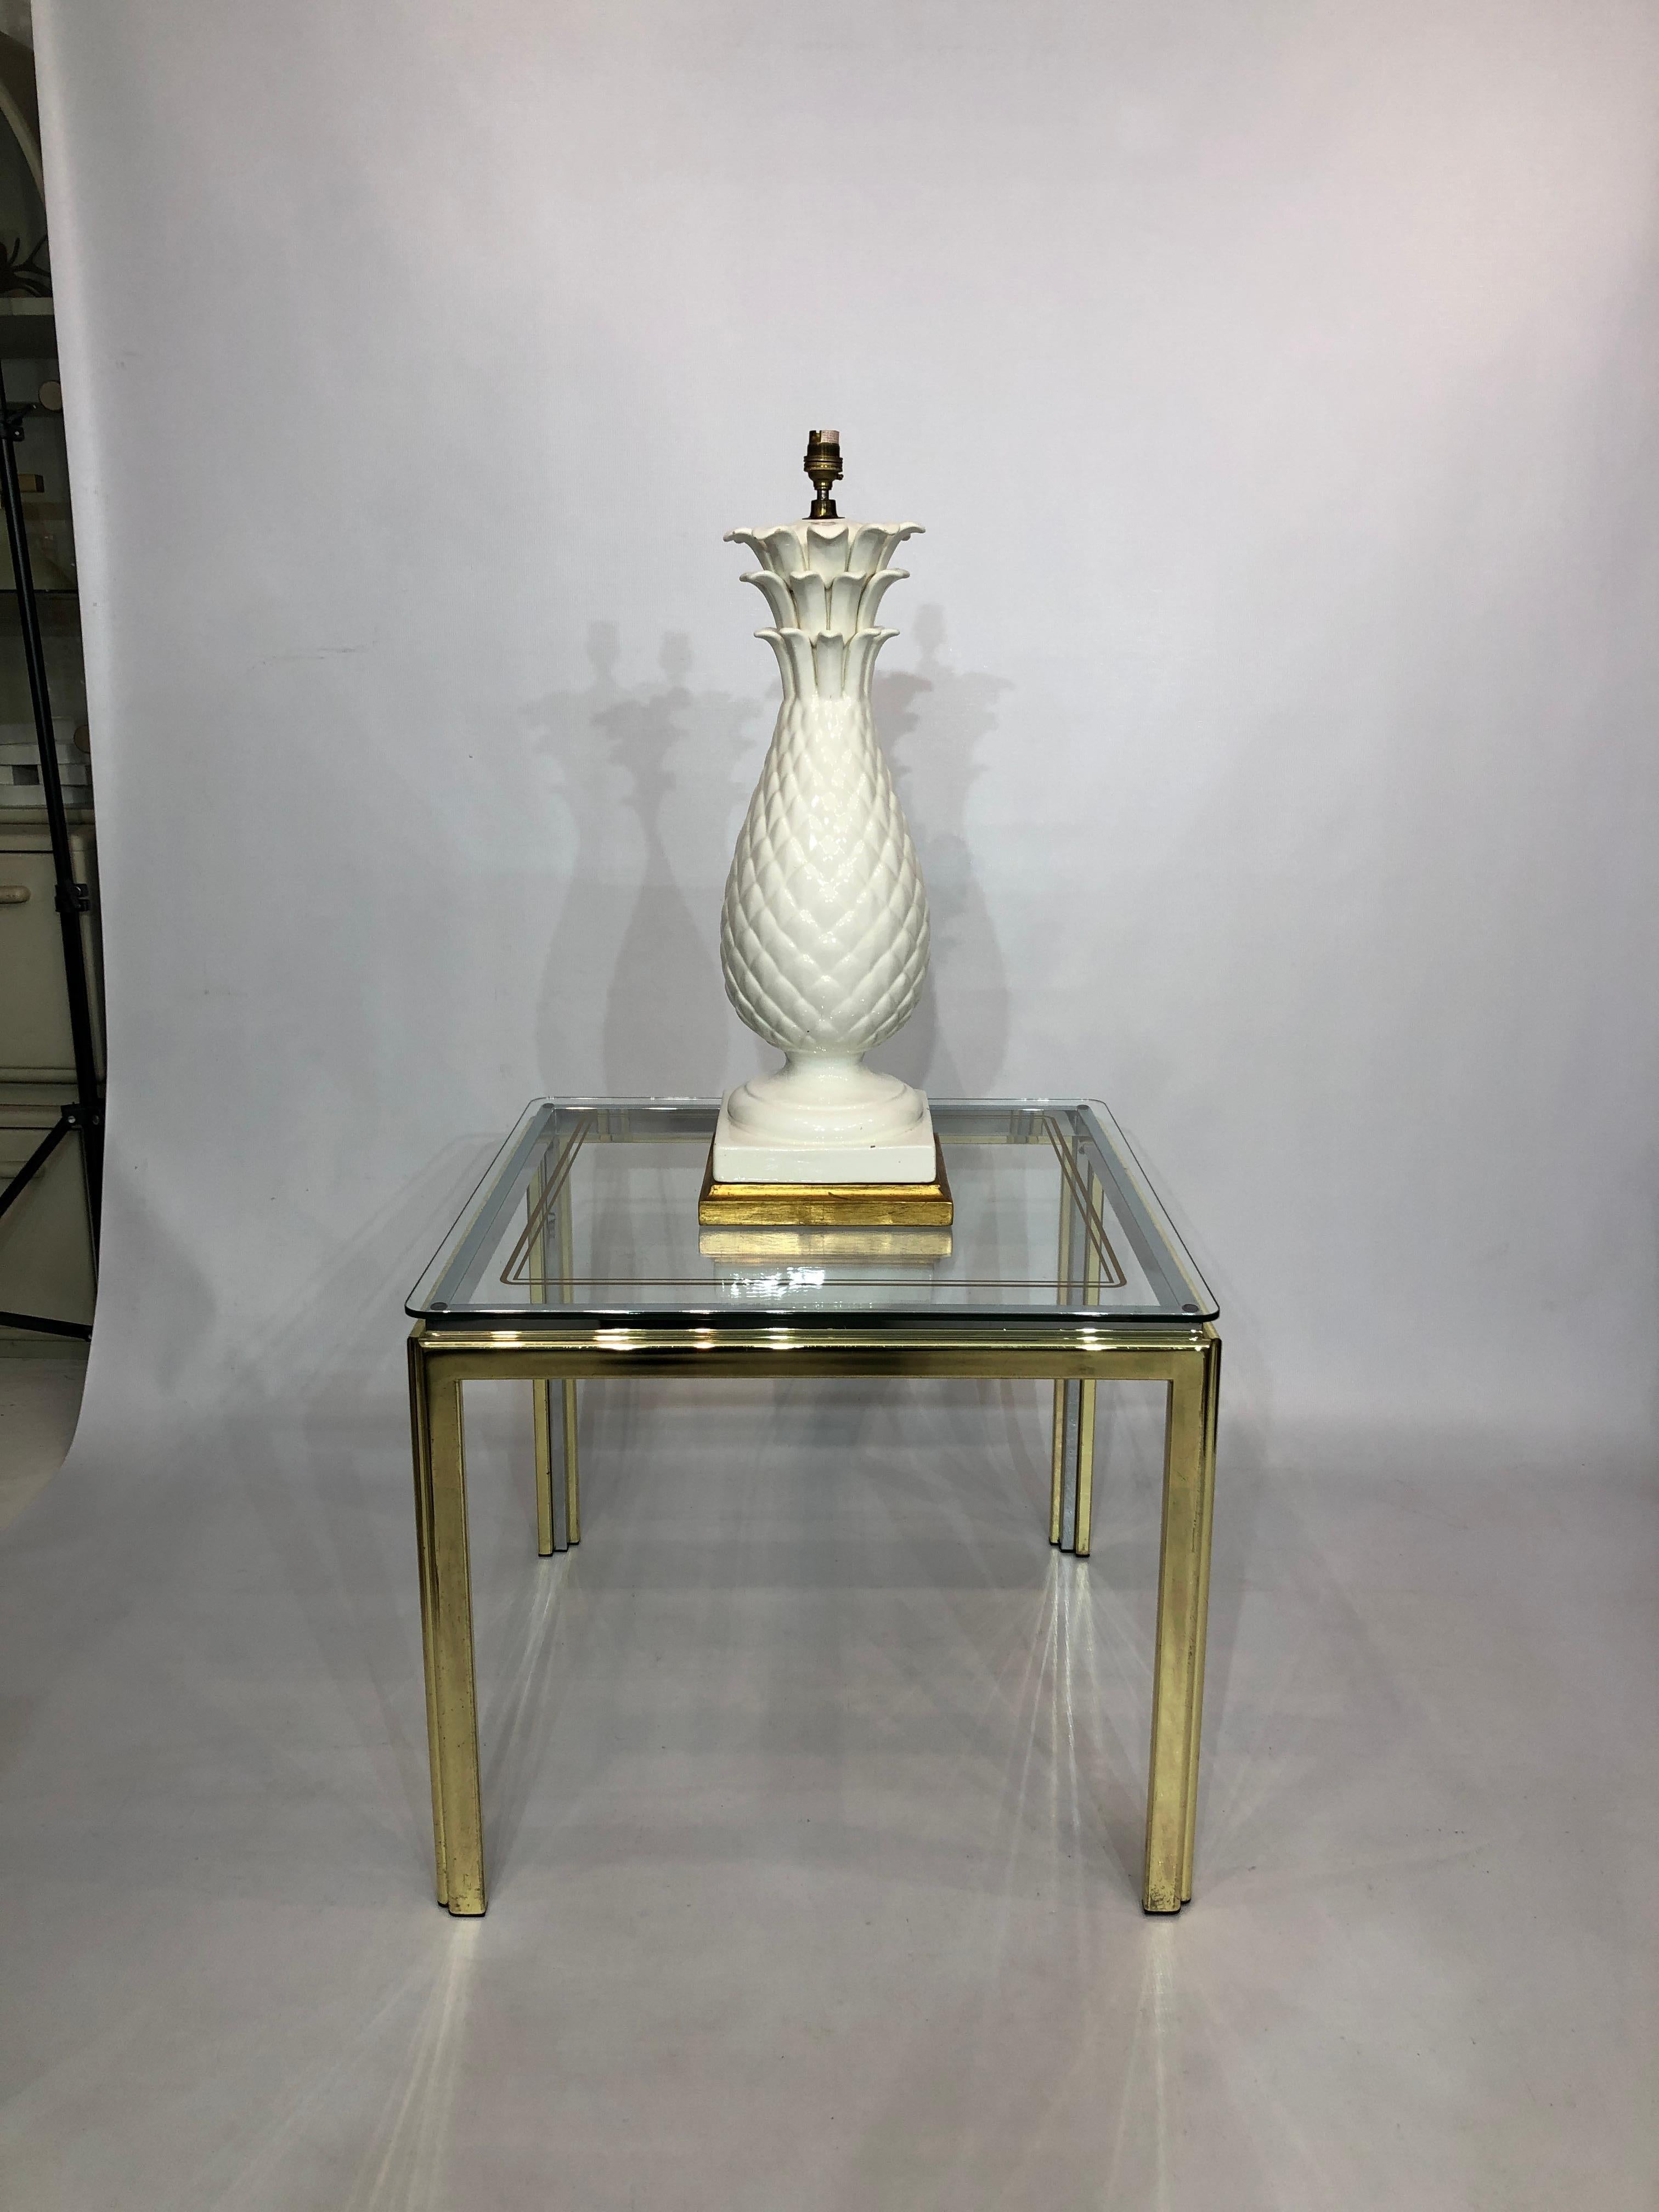 White Ceramic Pineapple Tall Table Lamp 1950s Hollywood Regency 1960s midcentury For Sale 5